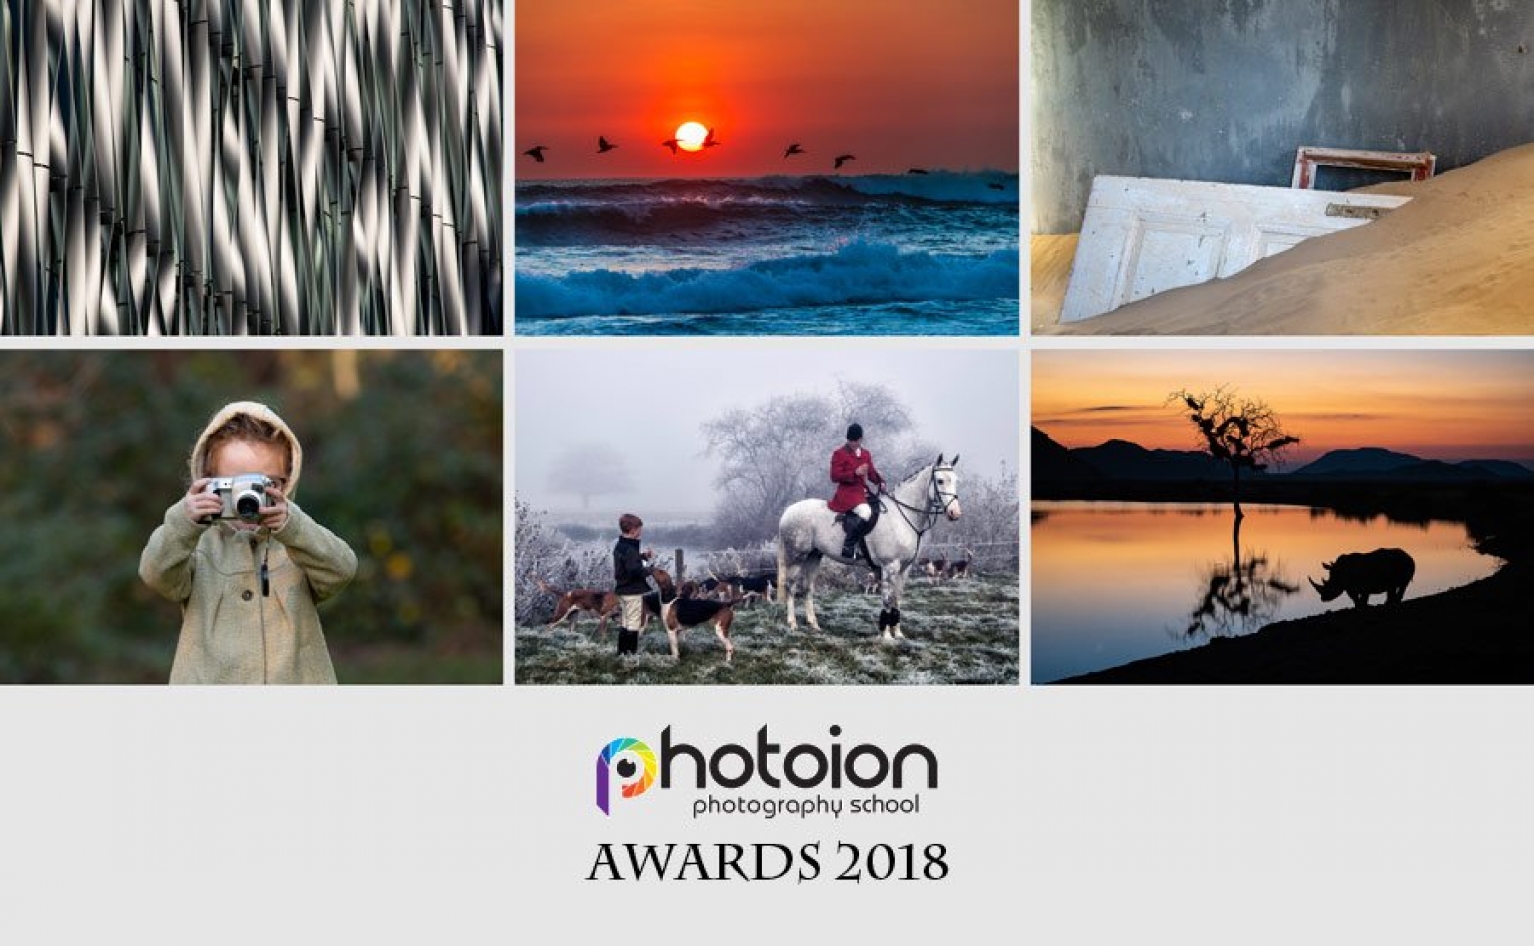 photoion photography awards 2018